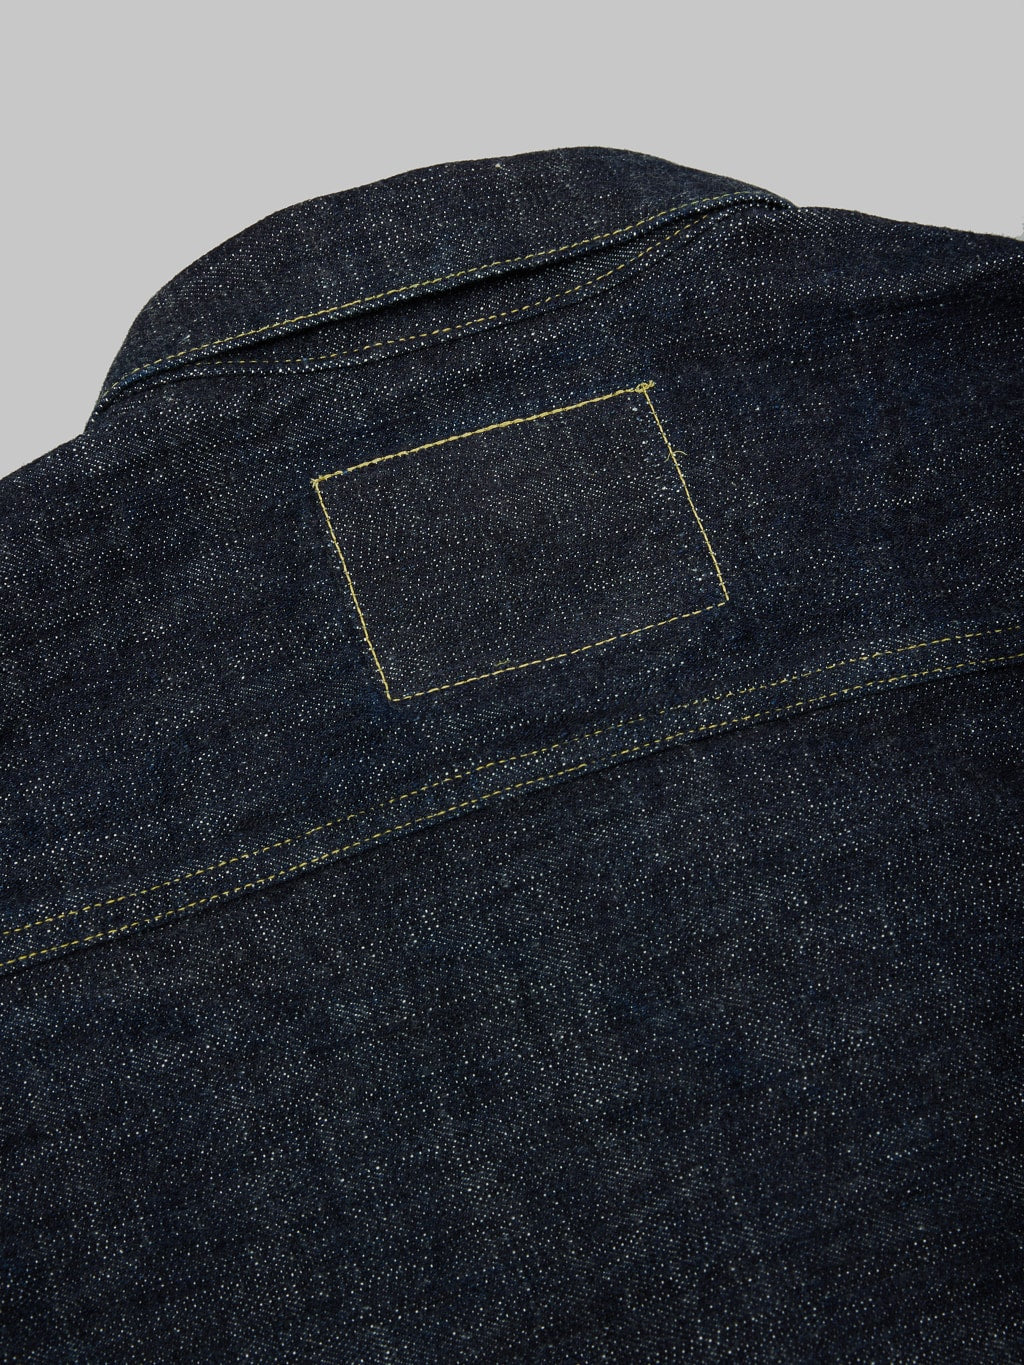 Fob factory denim pullover pocket shirt stitching detail